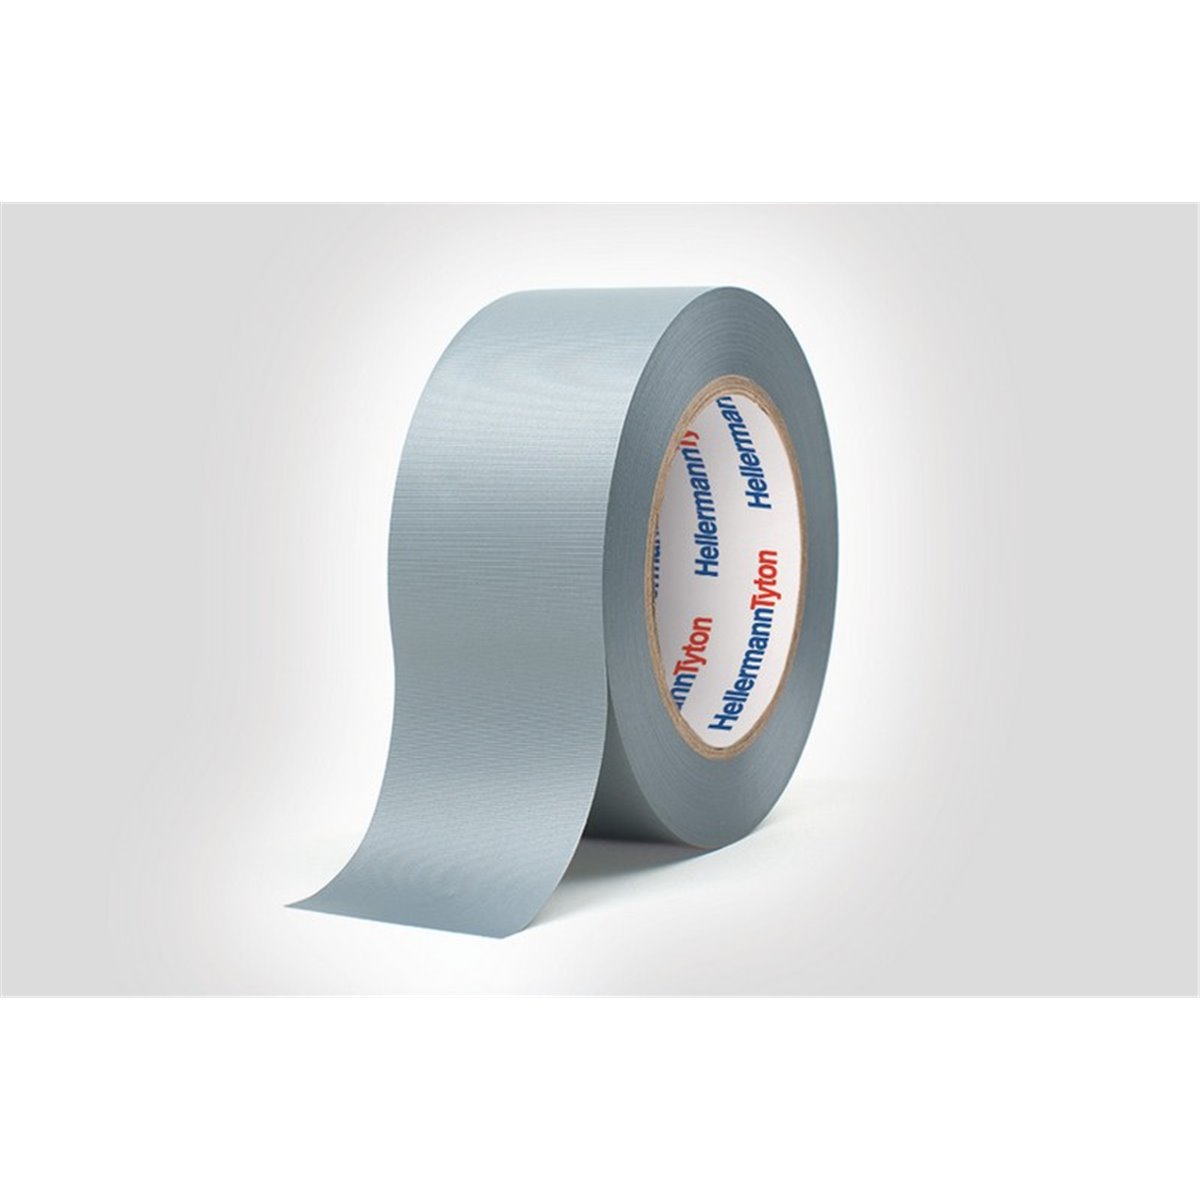 PVC Electrical insulation tape HTAPE-ALLROUND1500-PVC-GY HellermannTyton, 46m